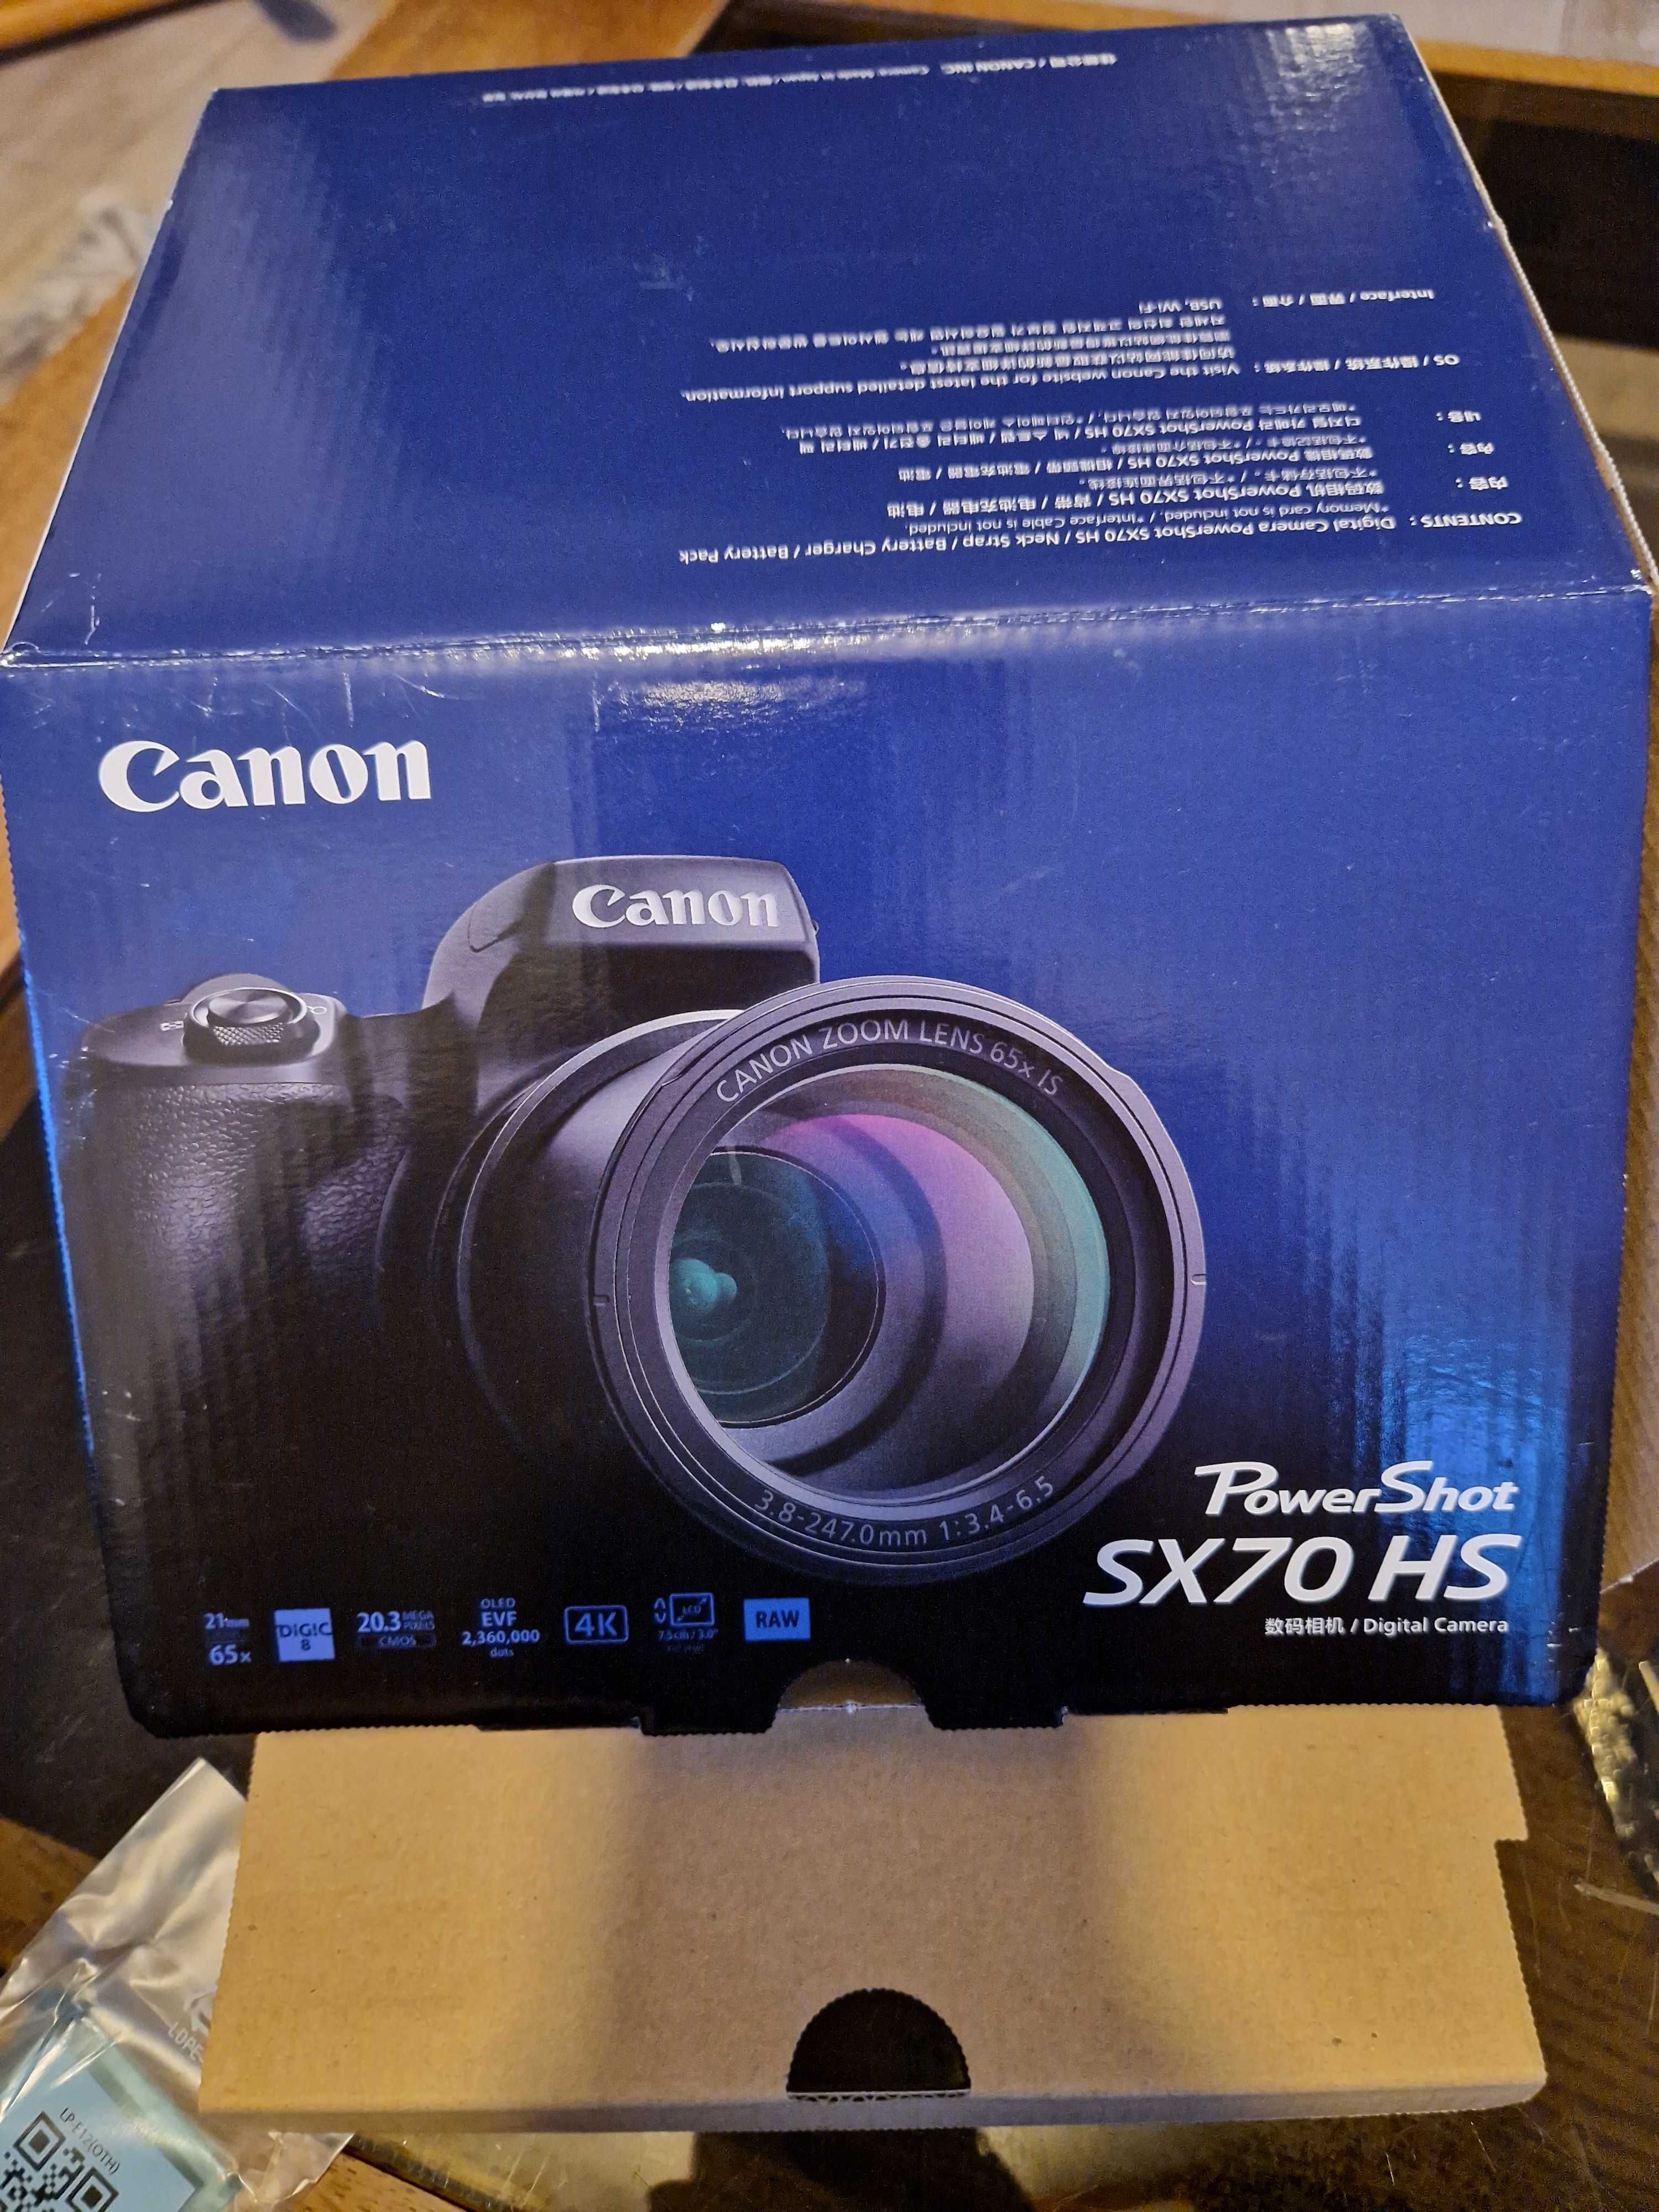 Aparat fotograficzny Canon sx70 hs